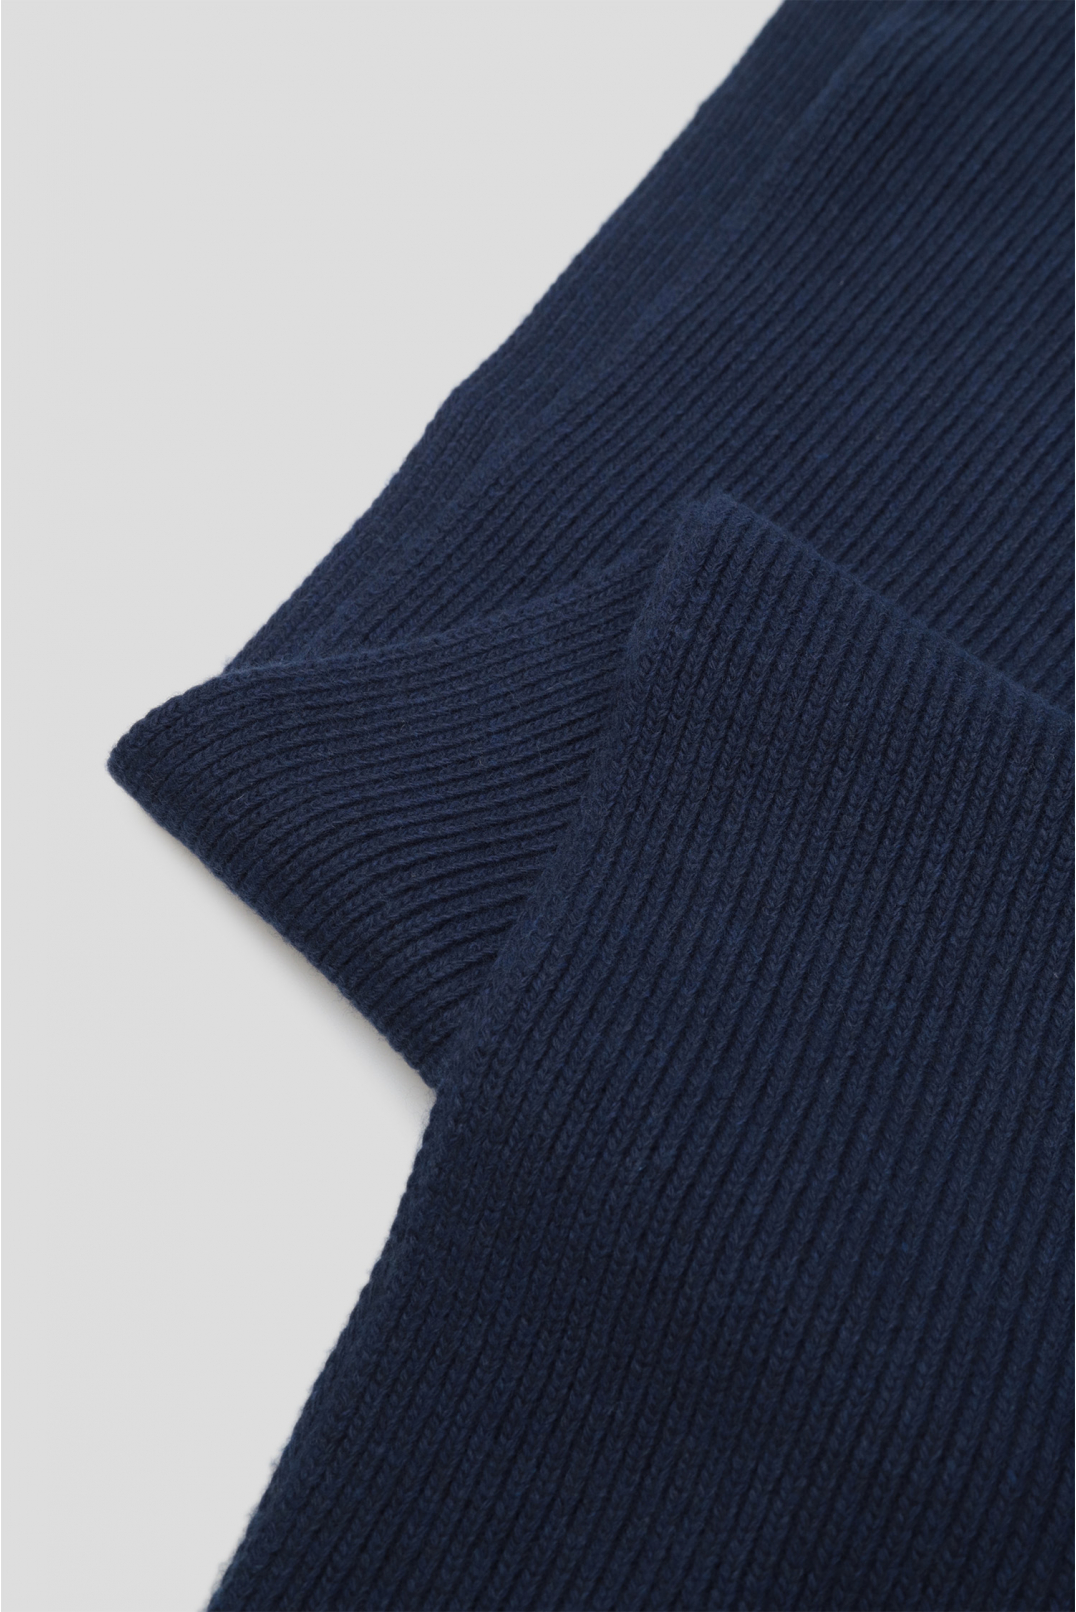 Мужской темно-синий набор аксессуаров (шапка, шарф) - 5